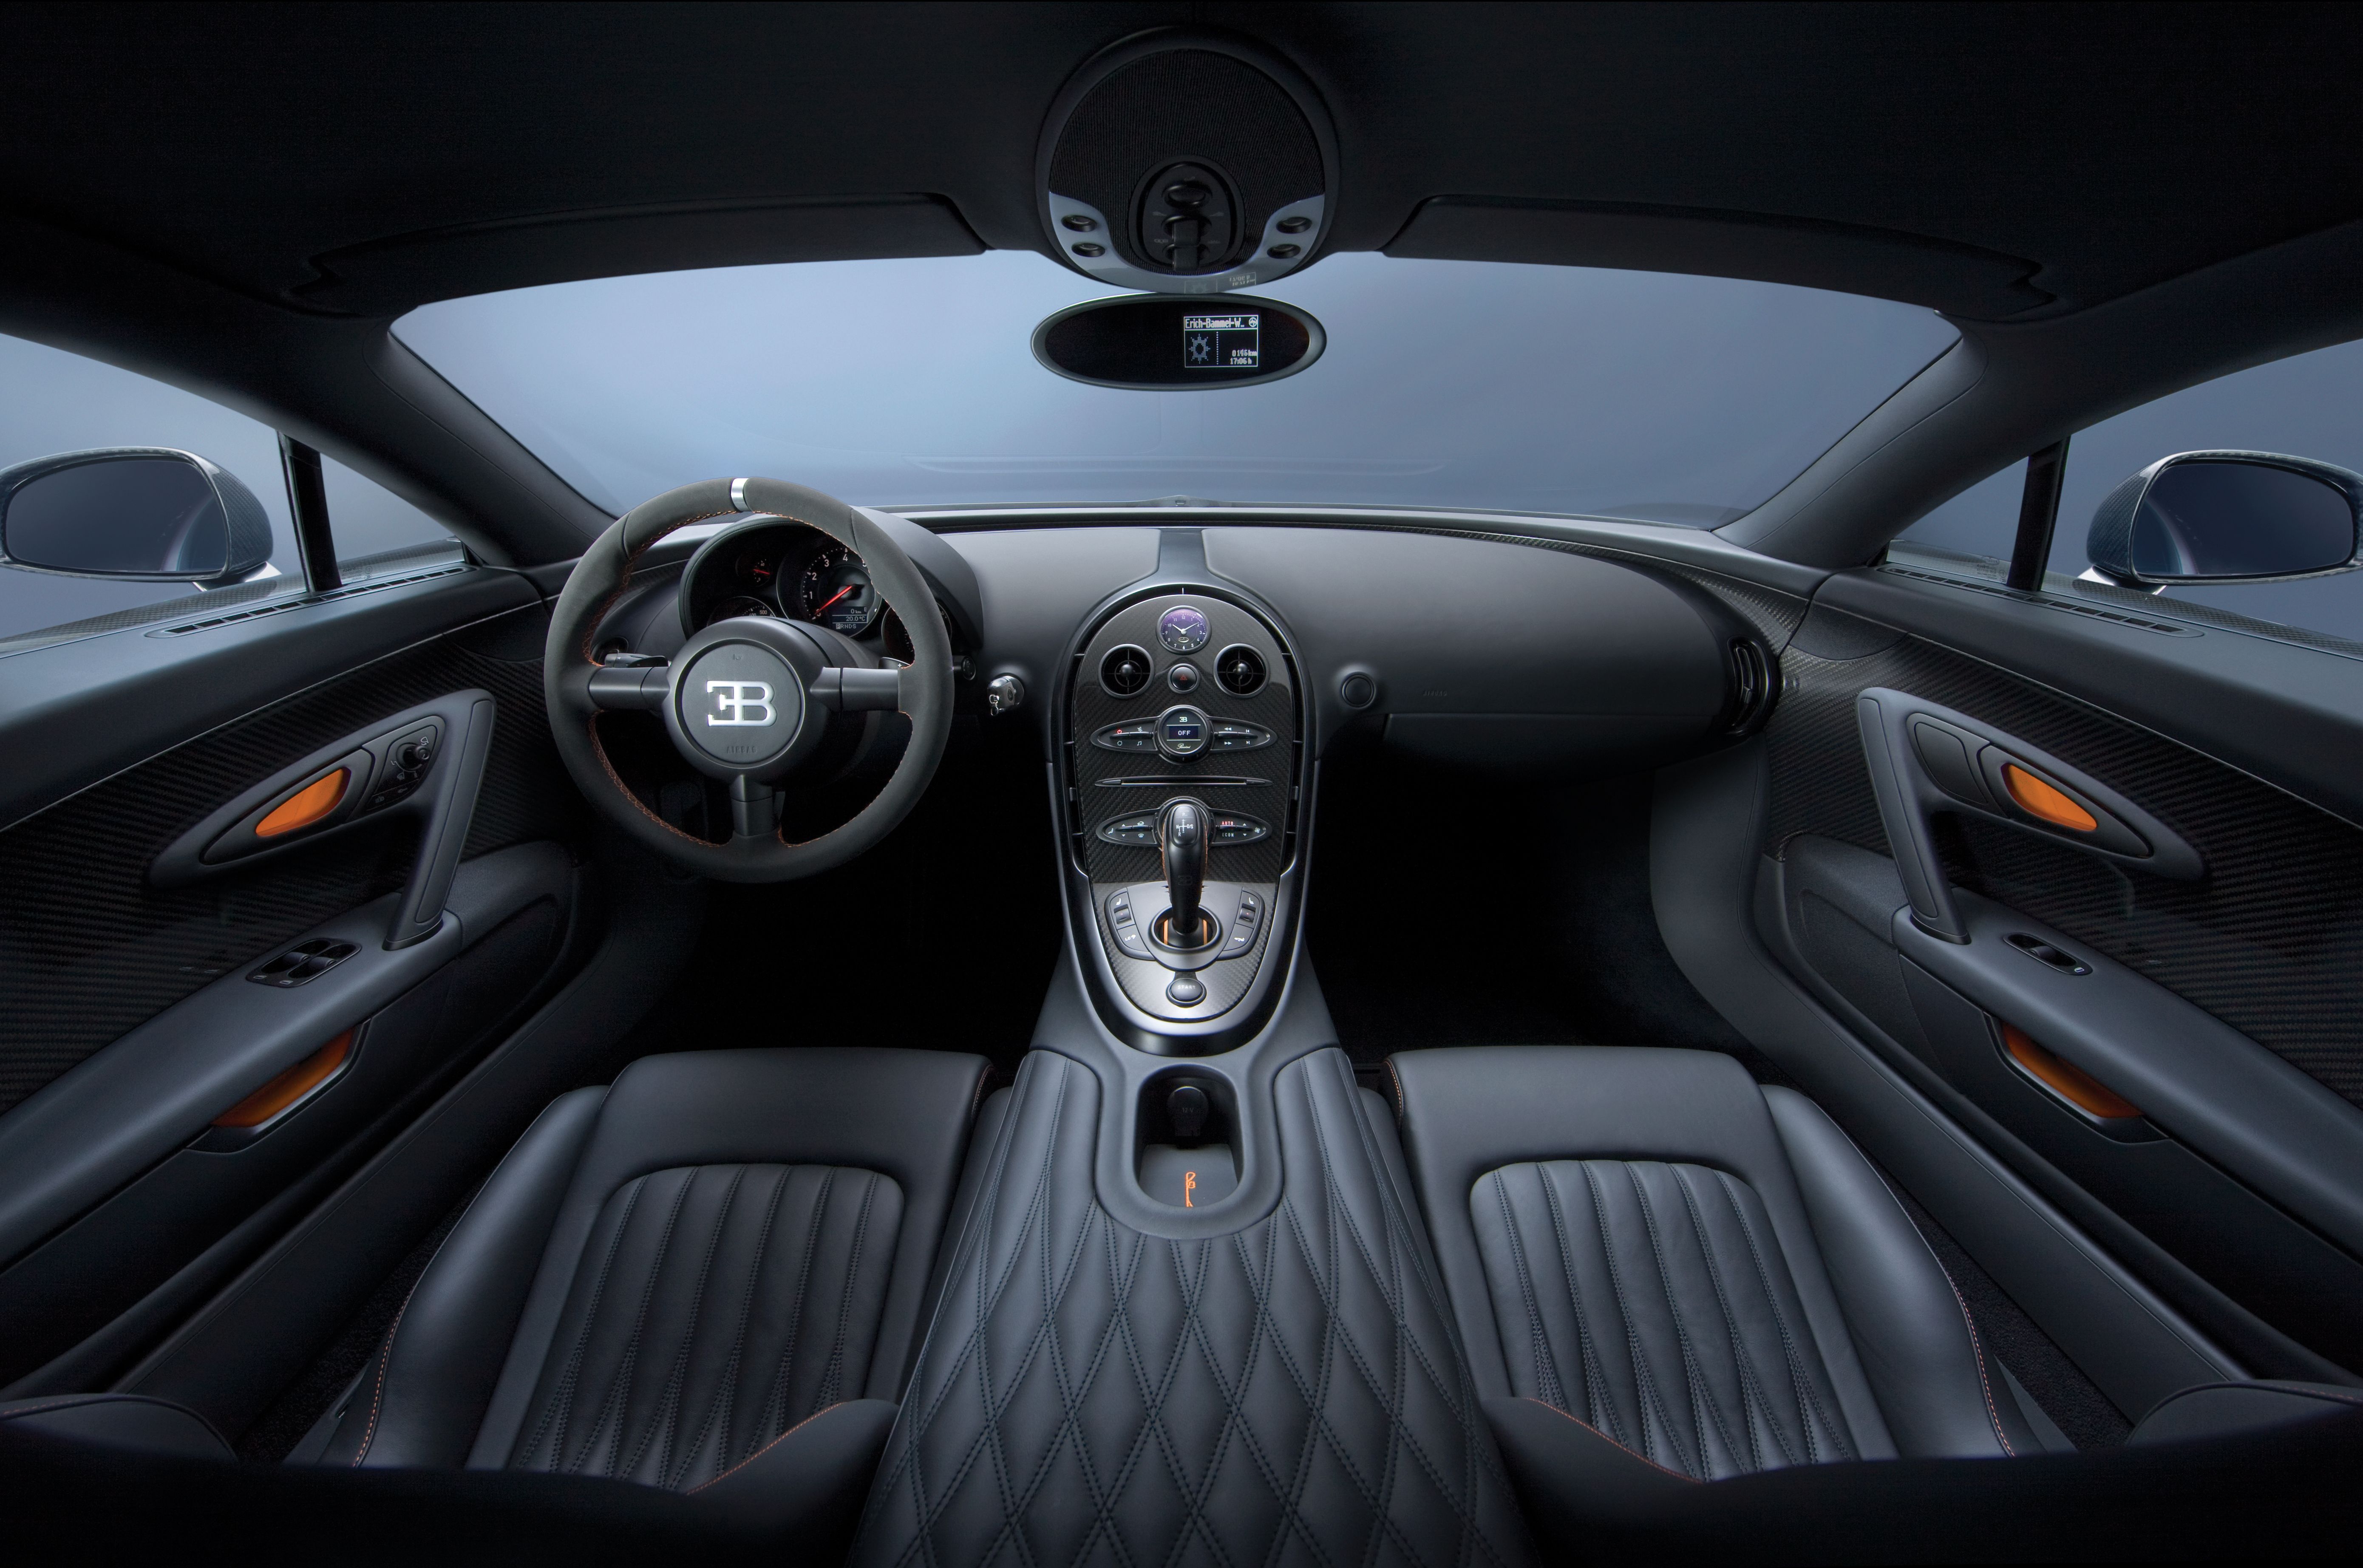 The interior of the 2011 Bugatti Veyron.